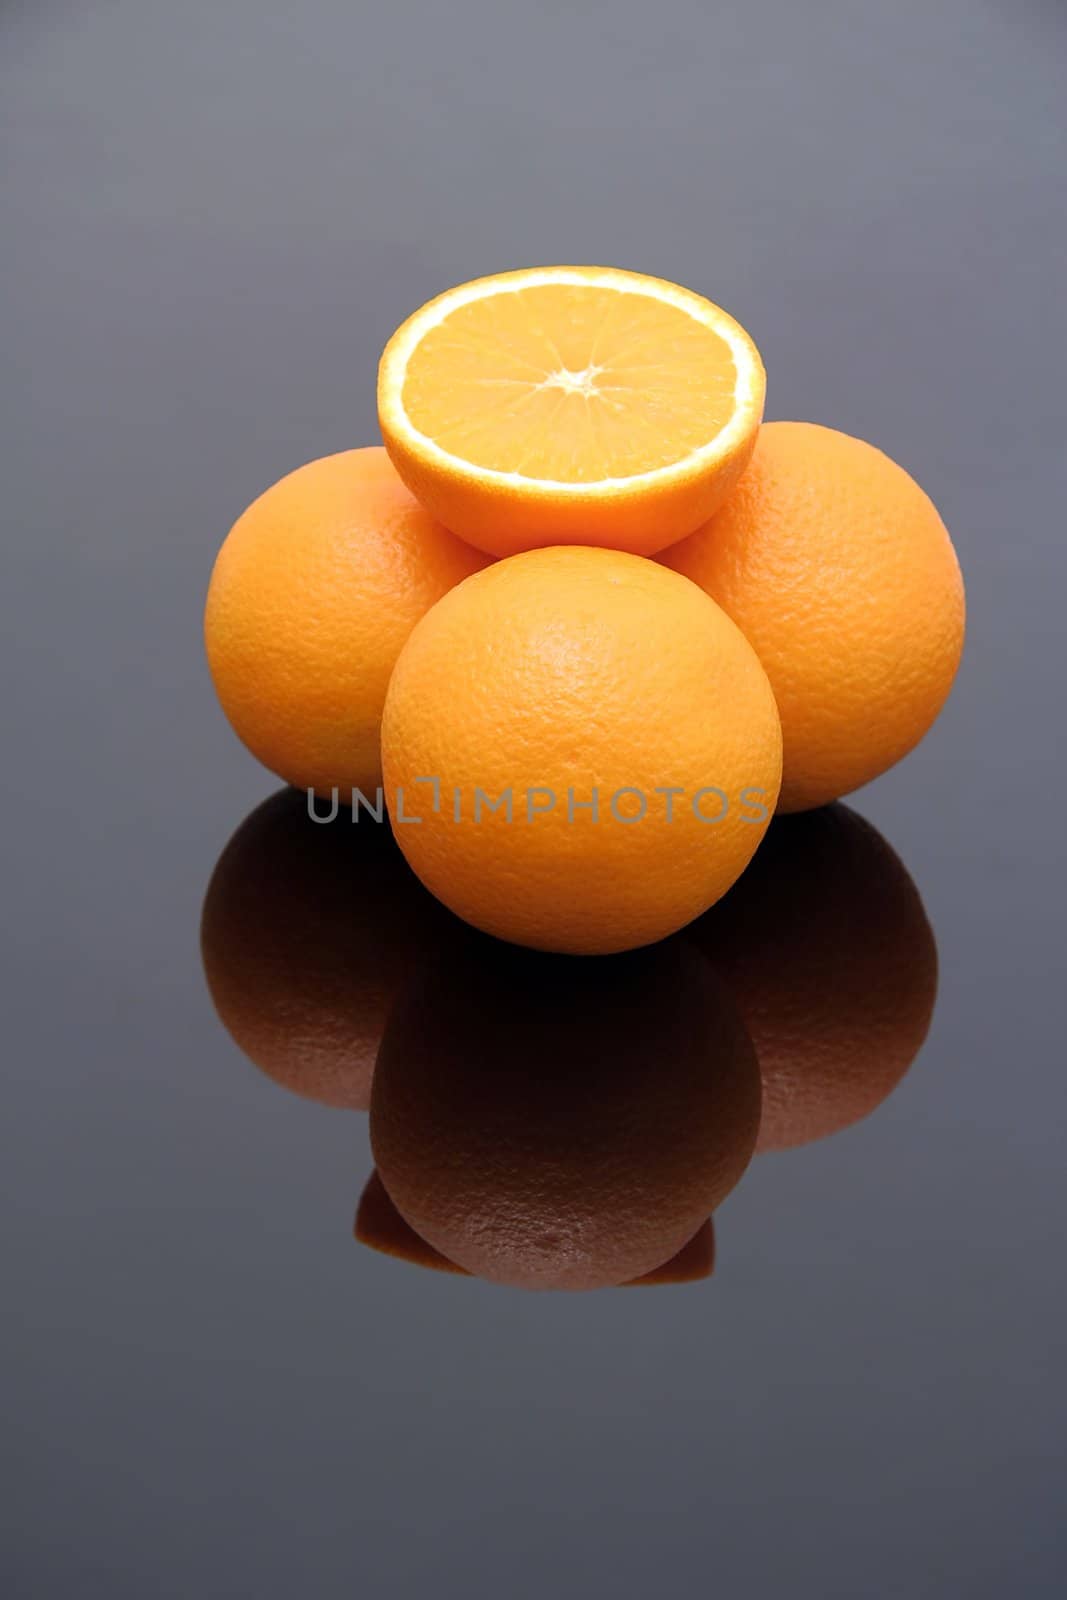 oranges by rorem